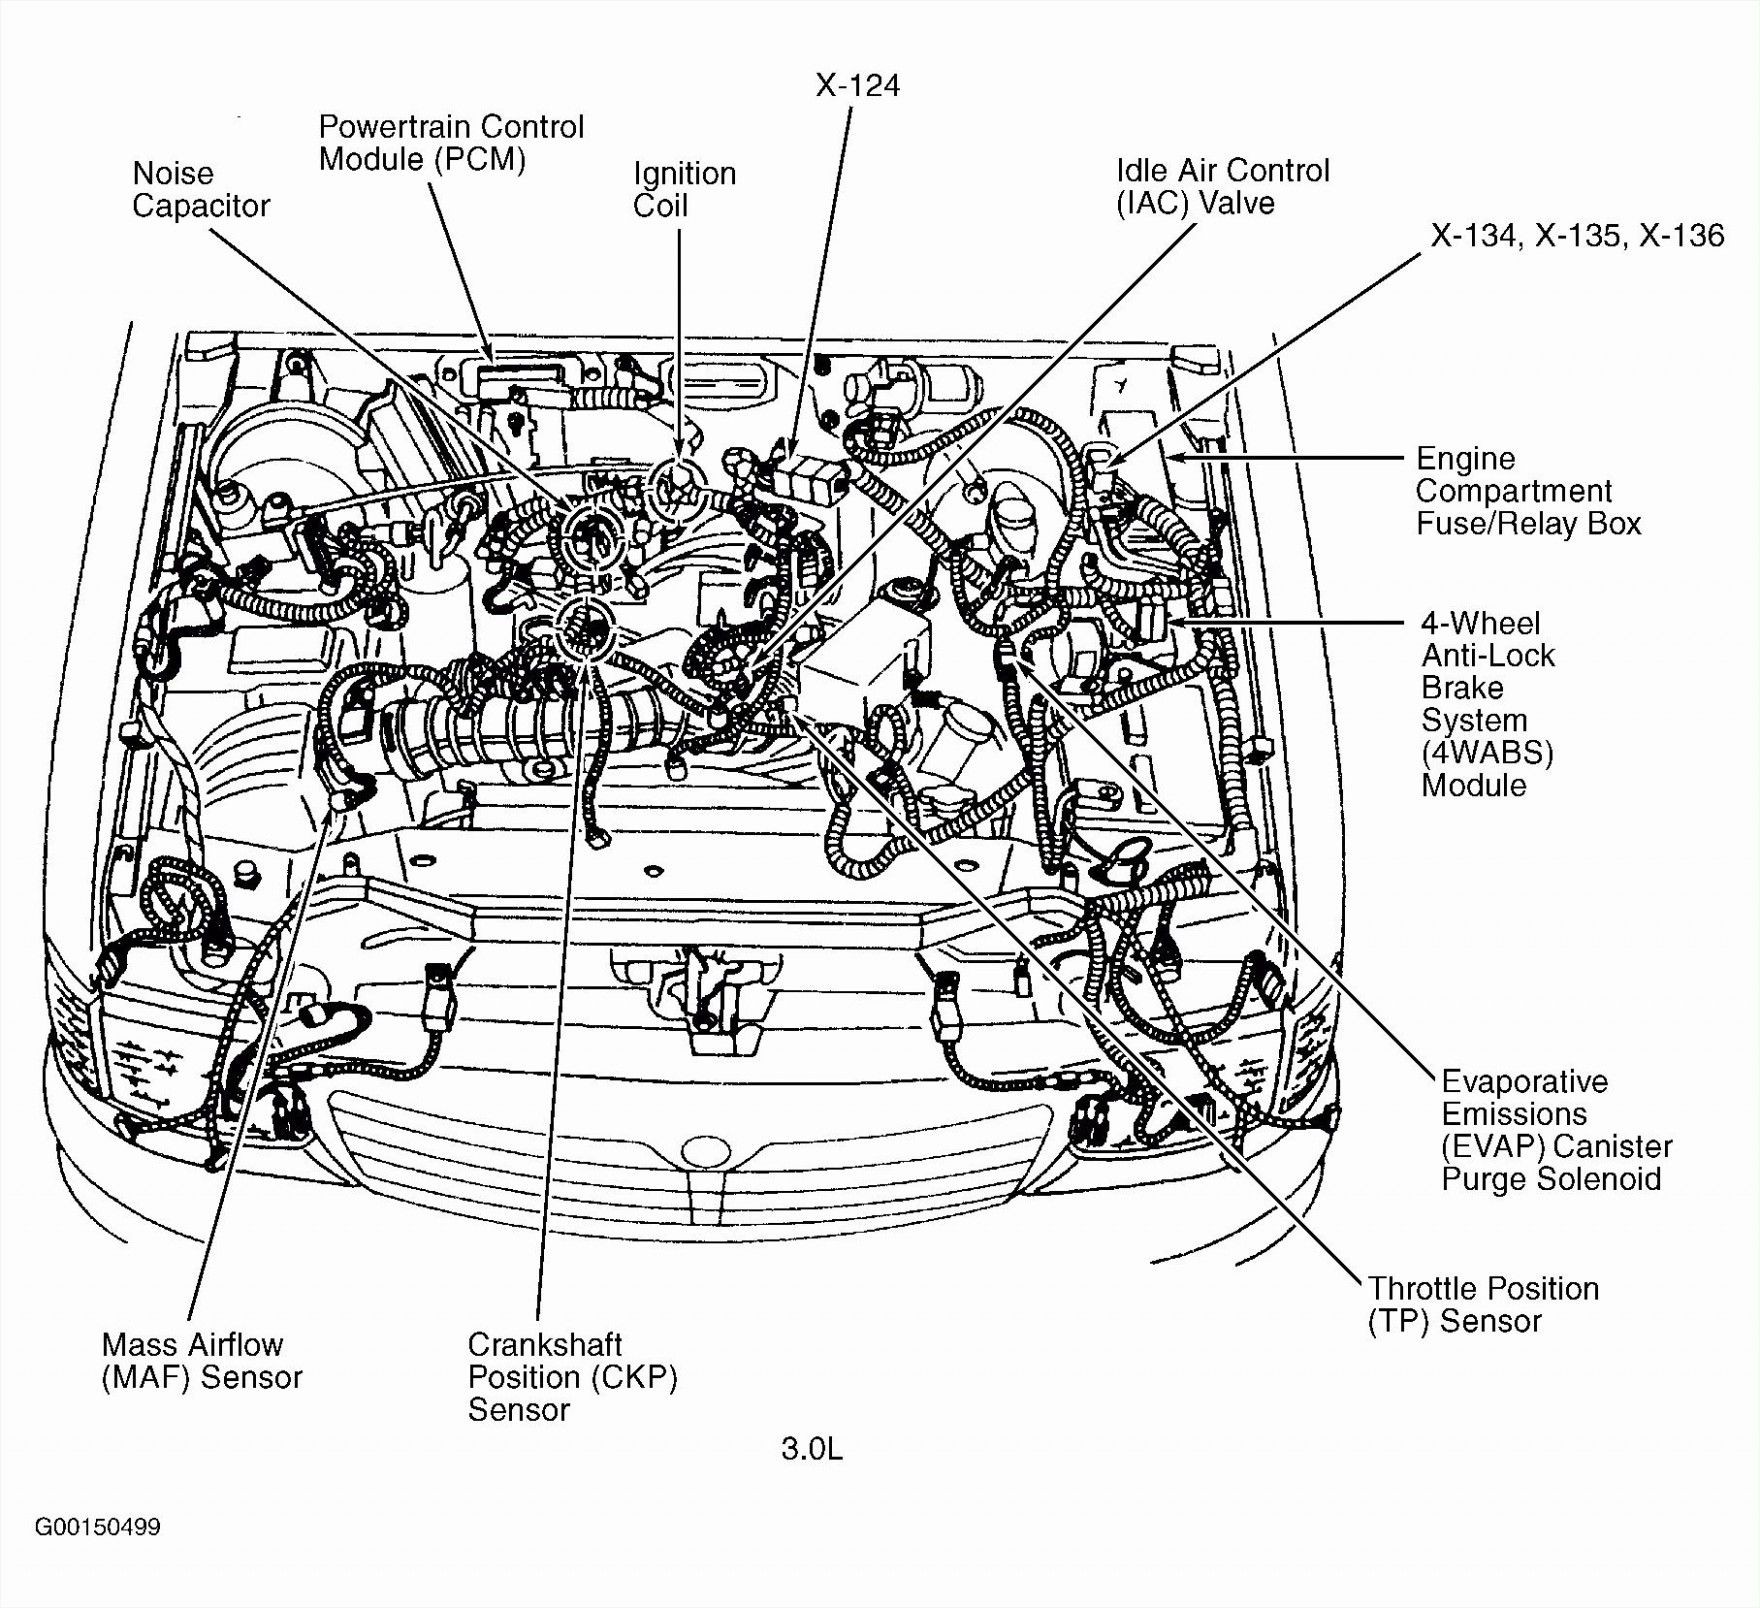 Mazda 3 Engine Diagram toyota 3 3 Engine Diagram Wiring Diagrams Data Manager A Of Mazda 3 Engine Diagram